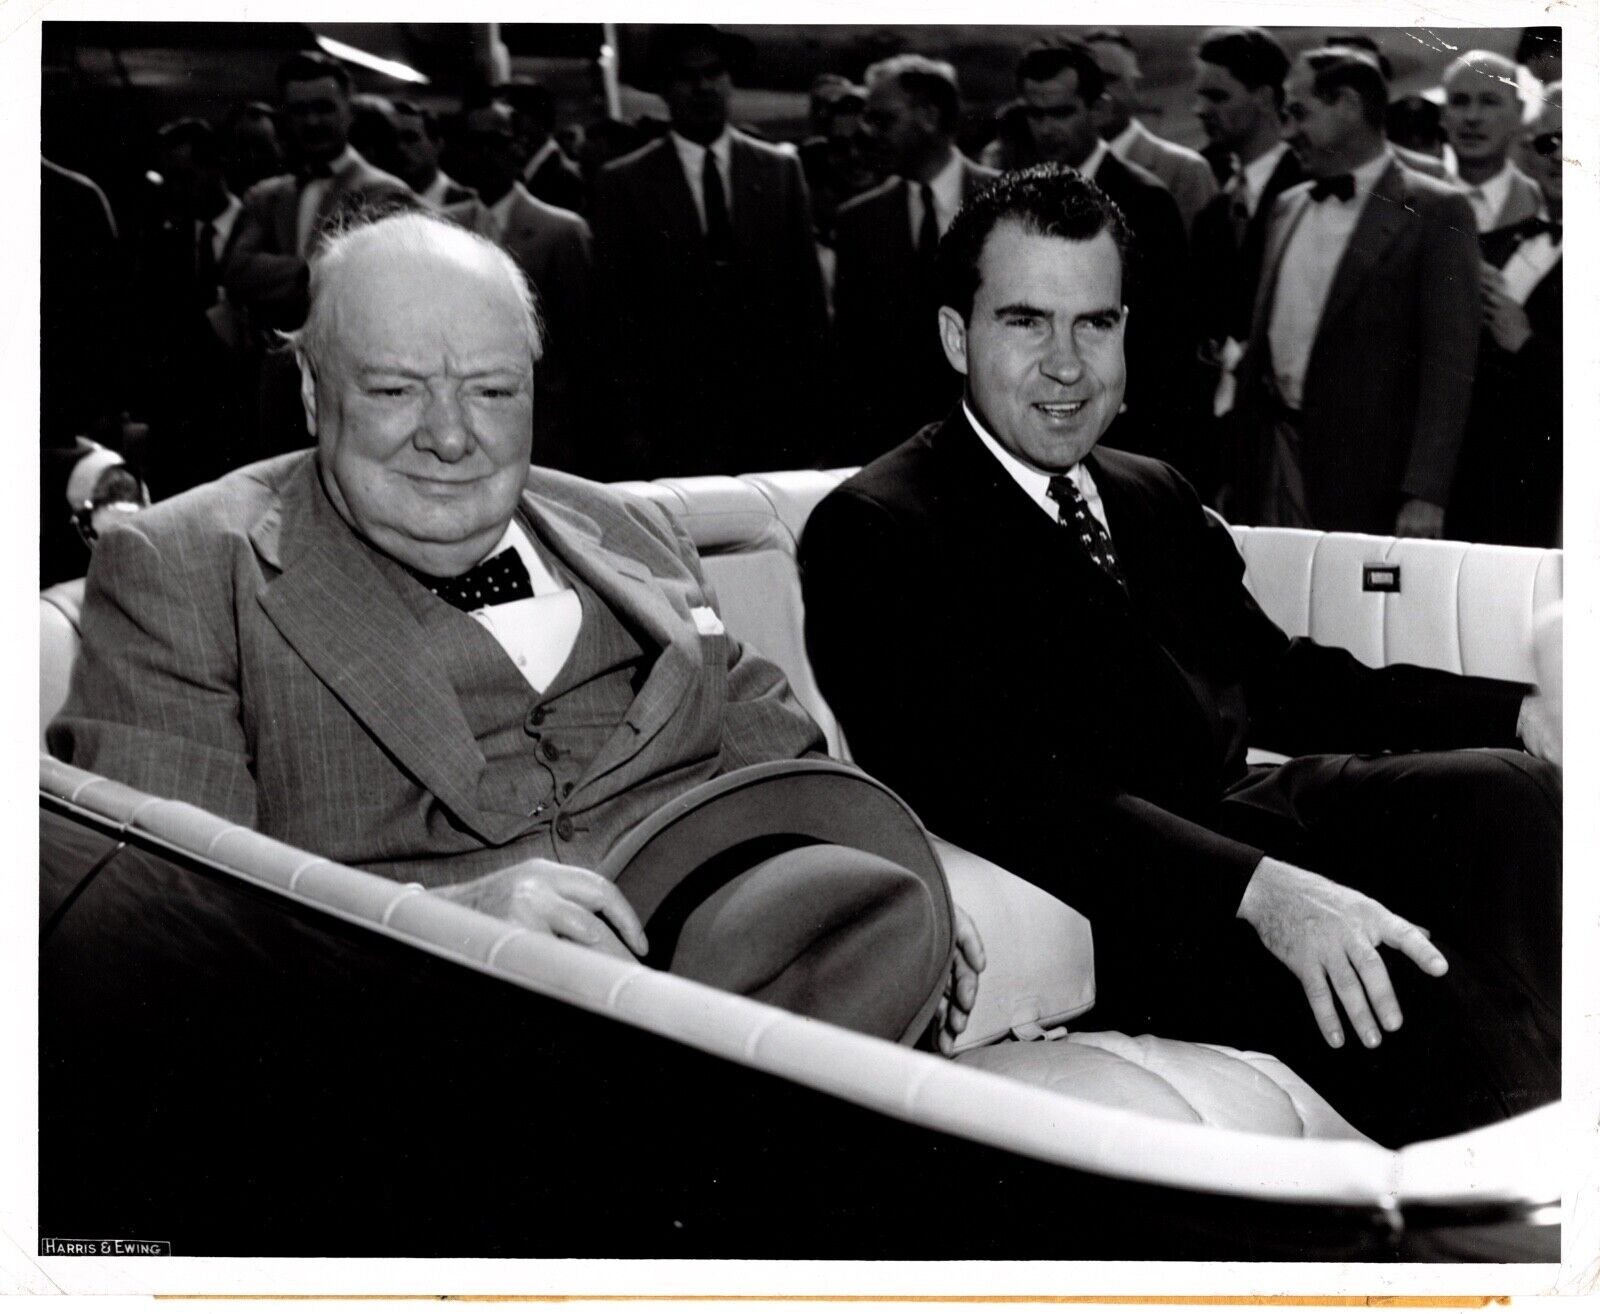 25 June 1954 press photo of Winston Churchill and Richard Nixon in Washington